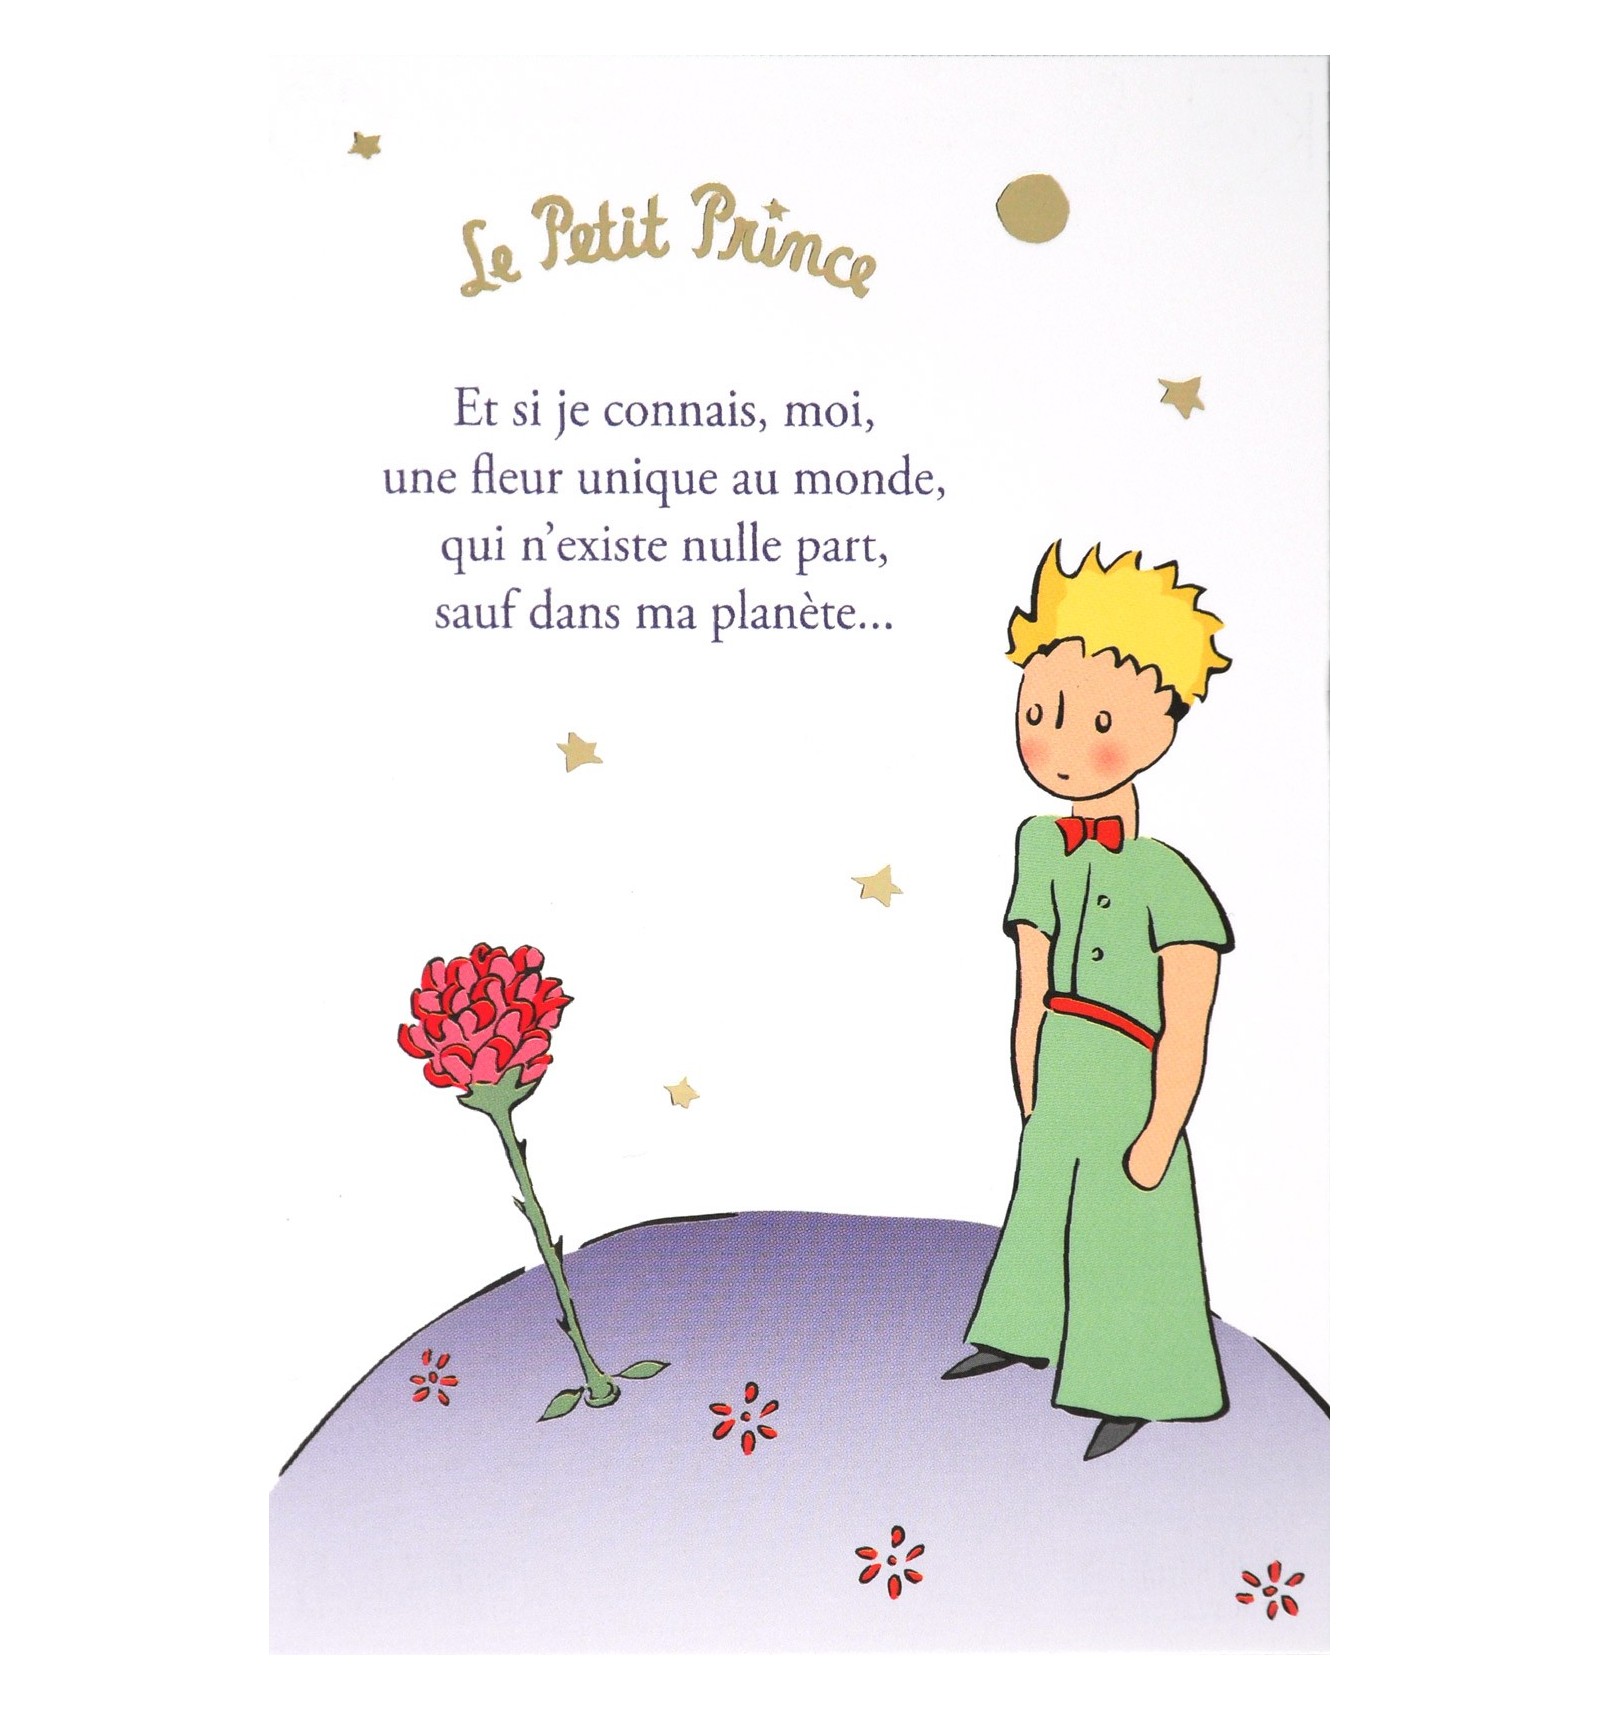 Флер перевод. Маленький принц на французском с переводом. Le petit Prince Daniel. Le petit Prince читать на французском. Маленький принц на китайском.